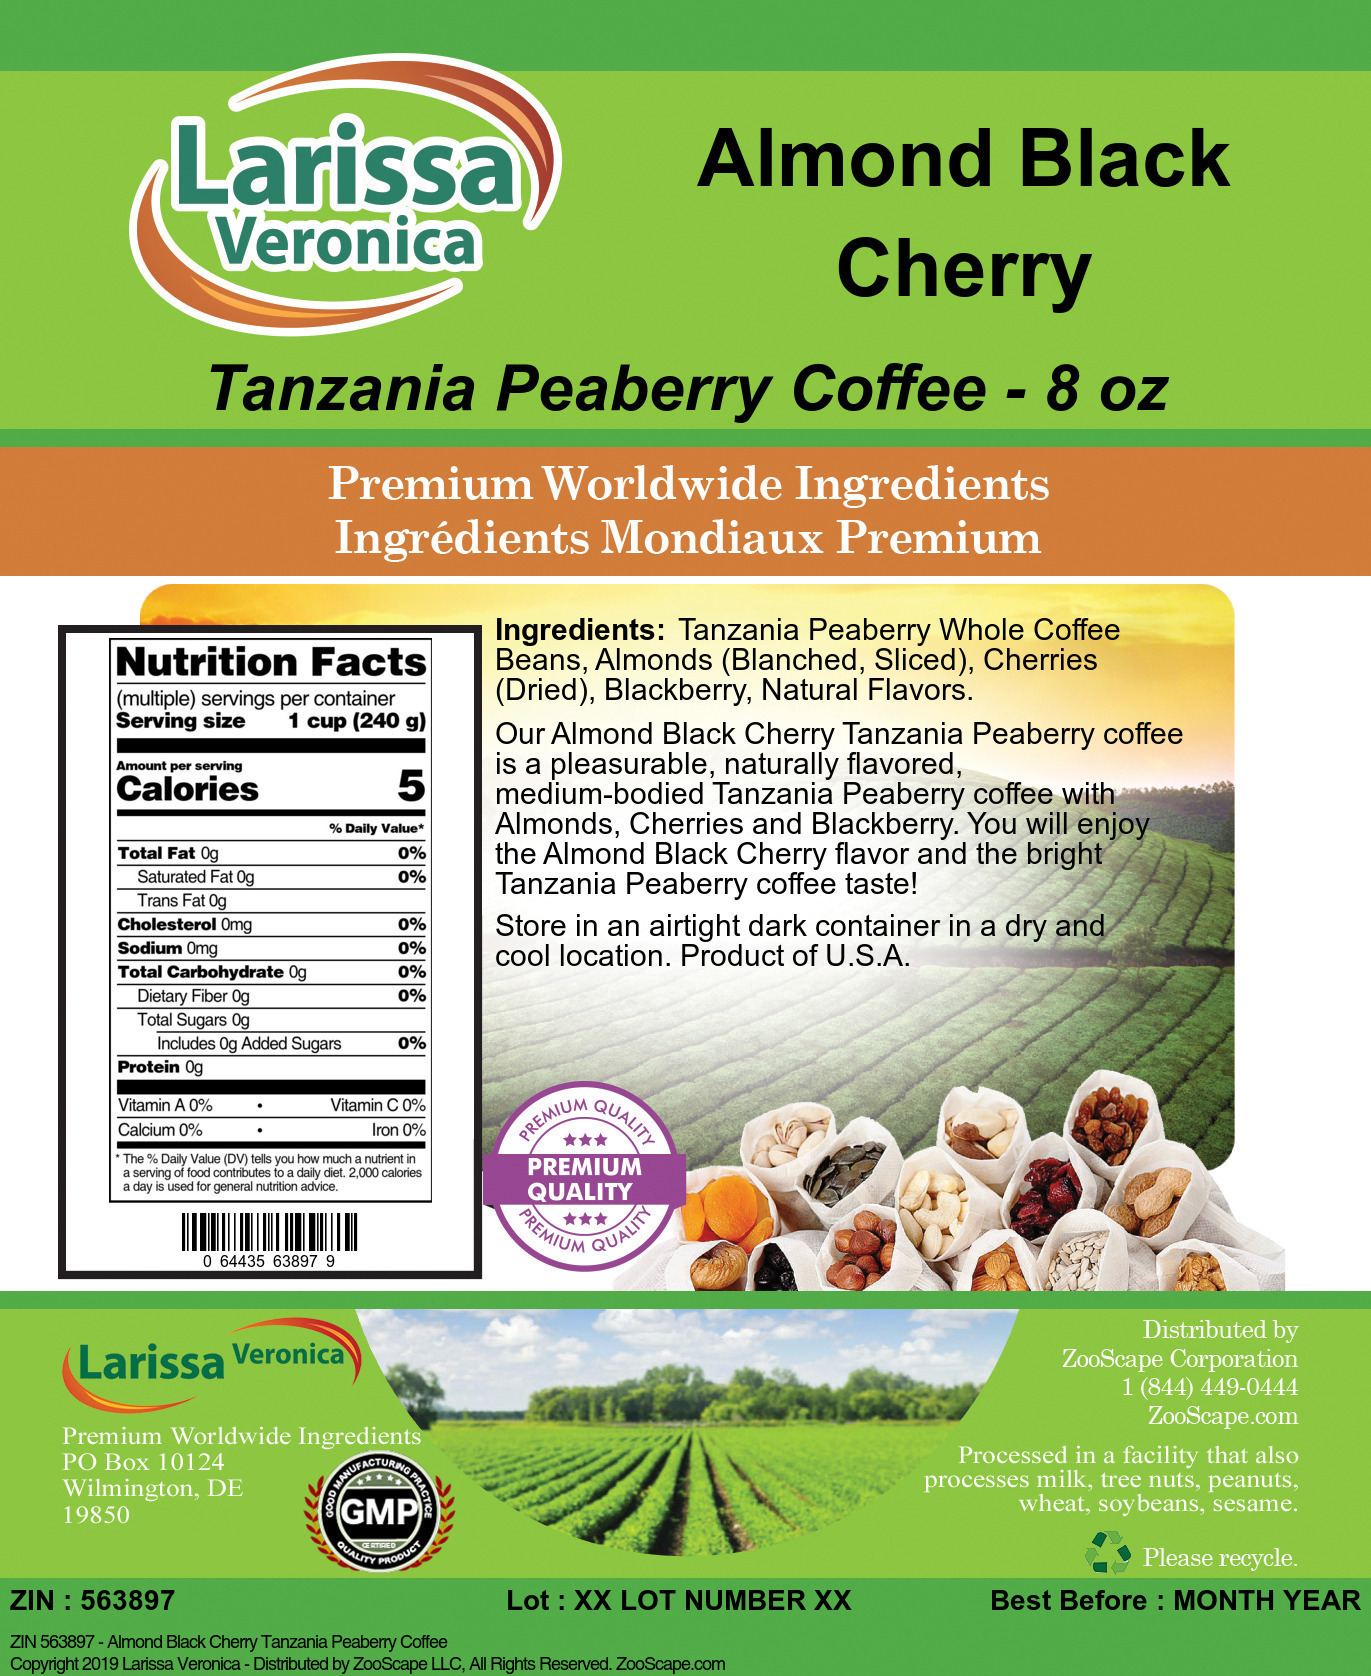 Almond Black Cherry Tanzania Peaberry Coffee - Label